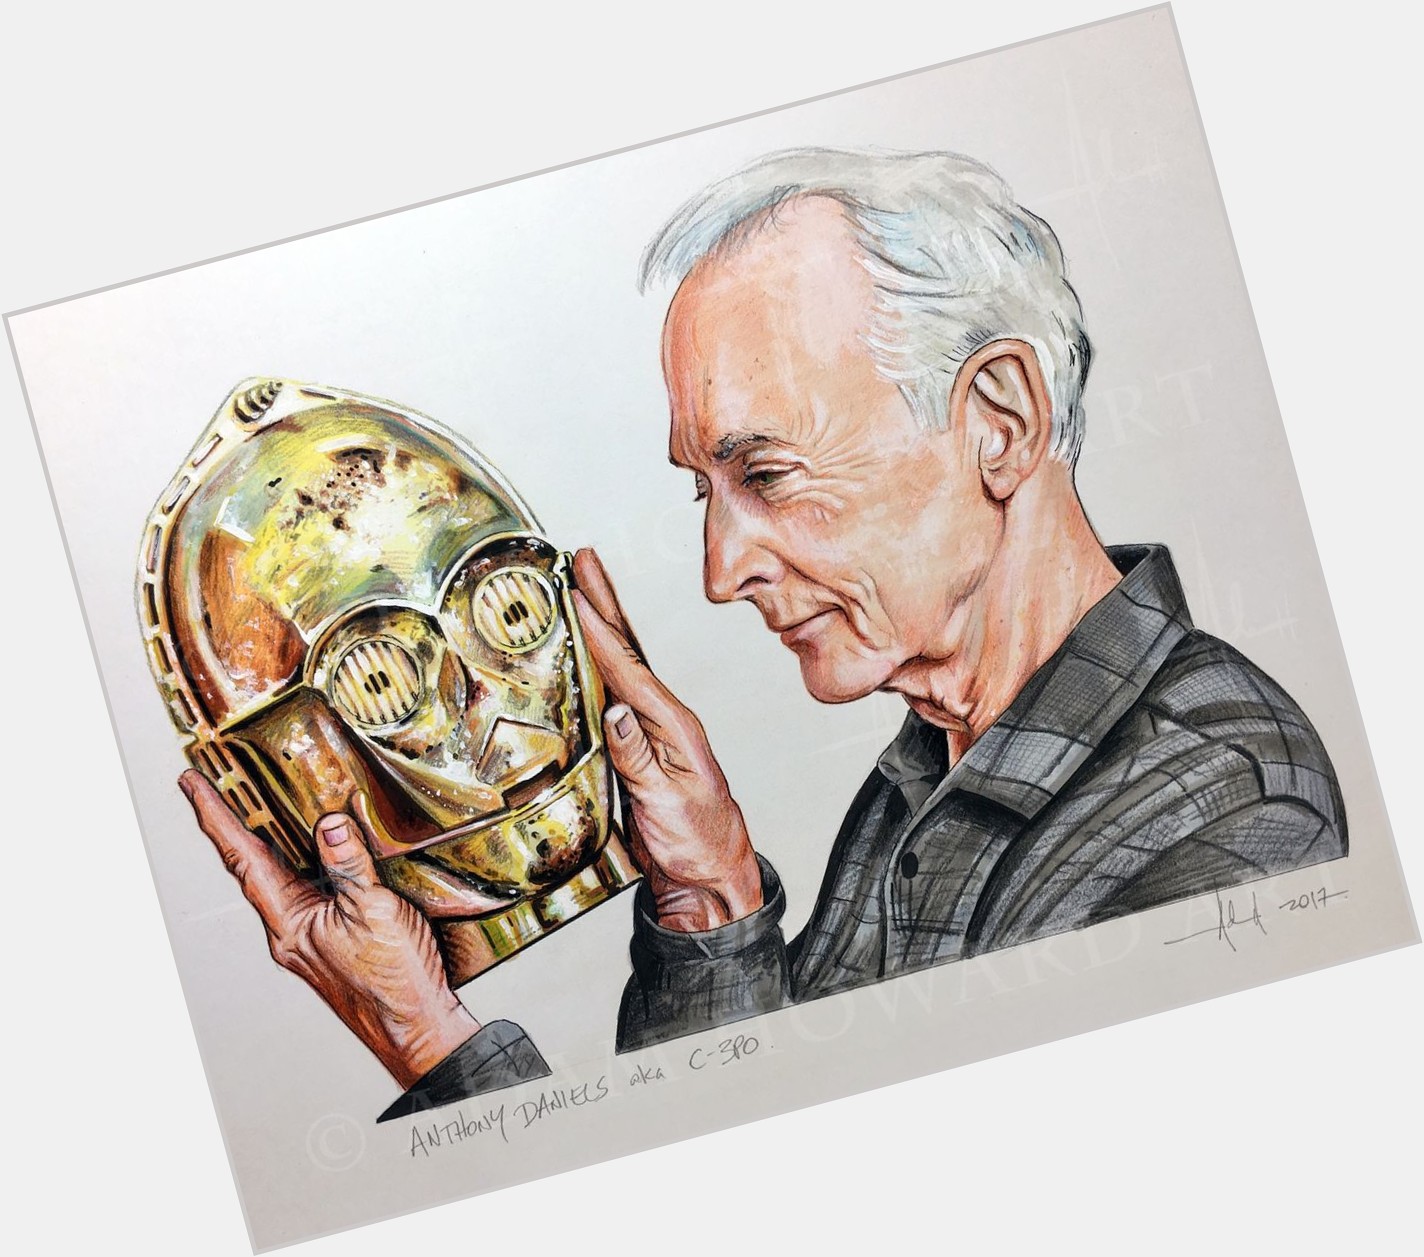 Happy Birthday to Anthony Daniels / C-3PO art by Adam Howard 